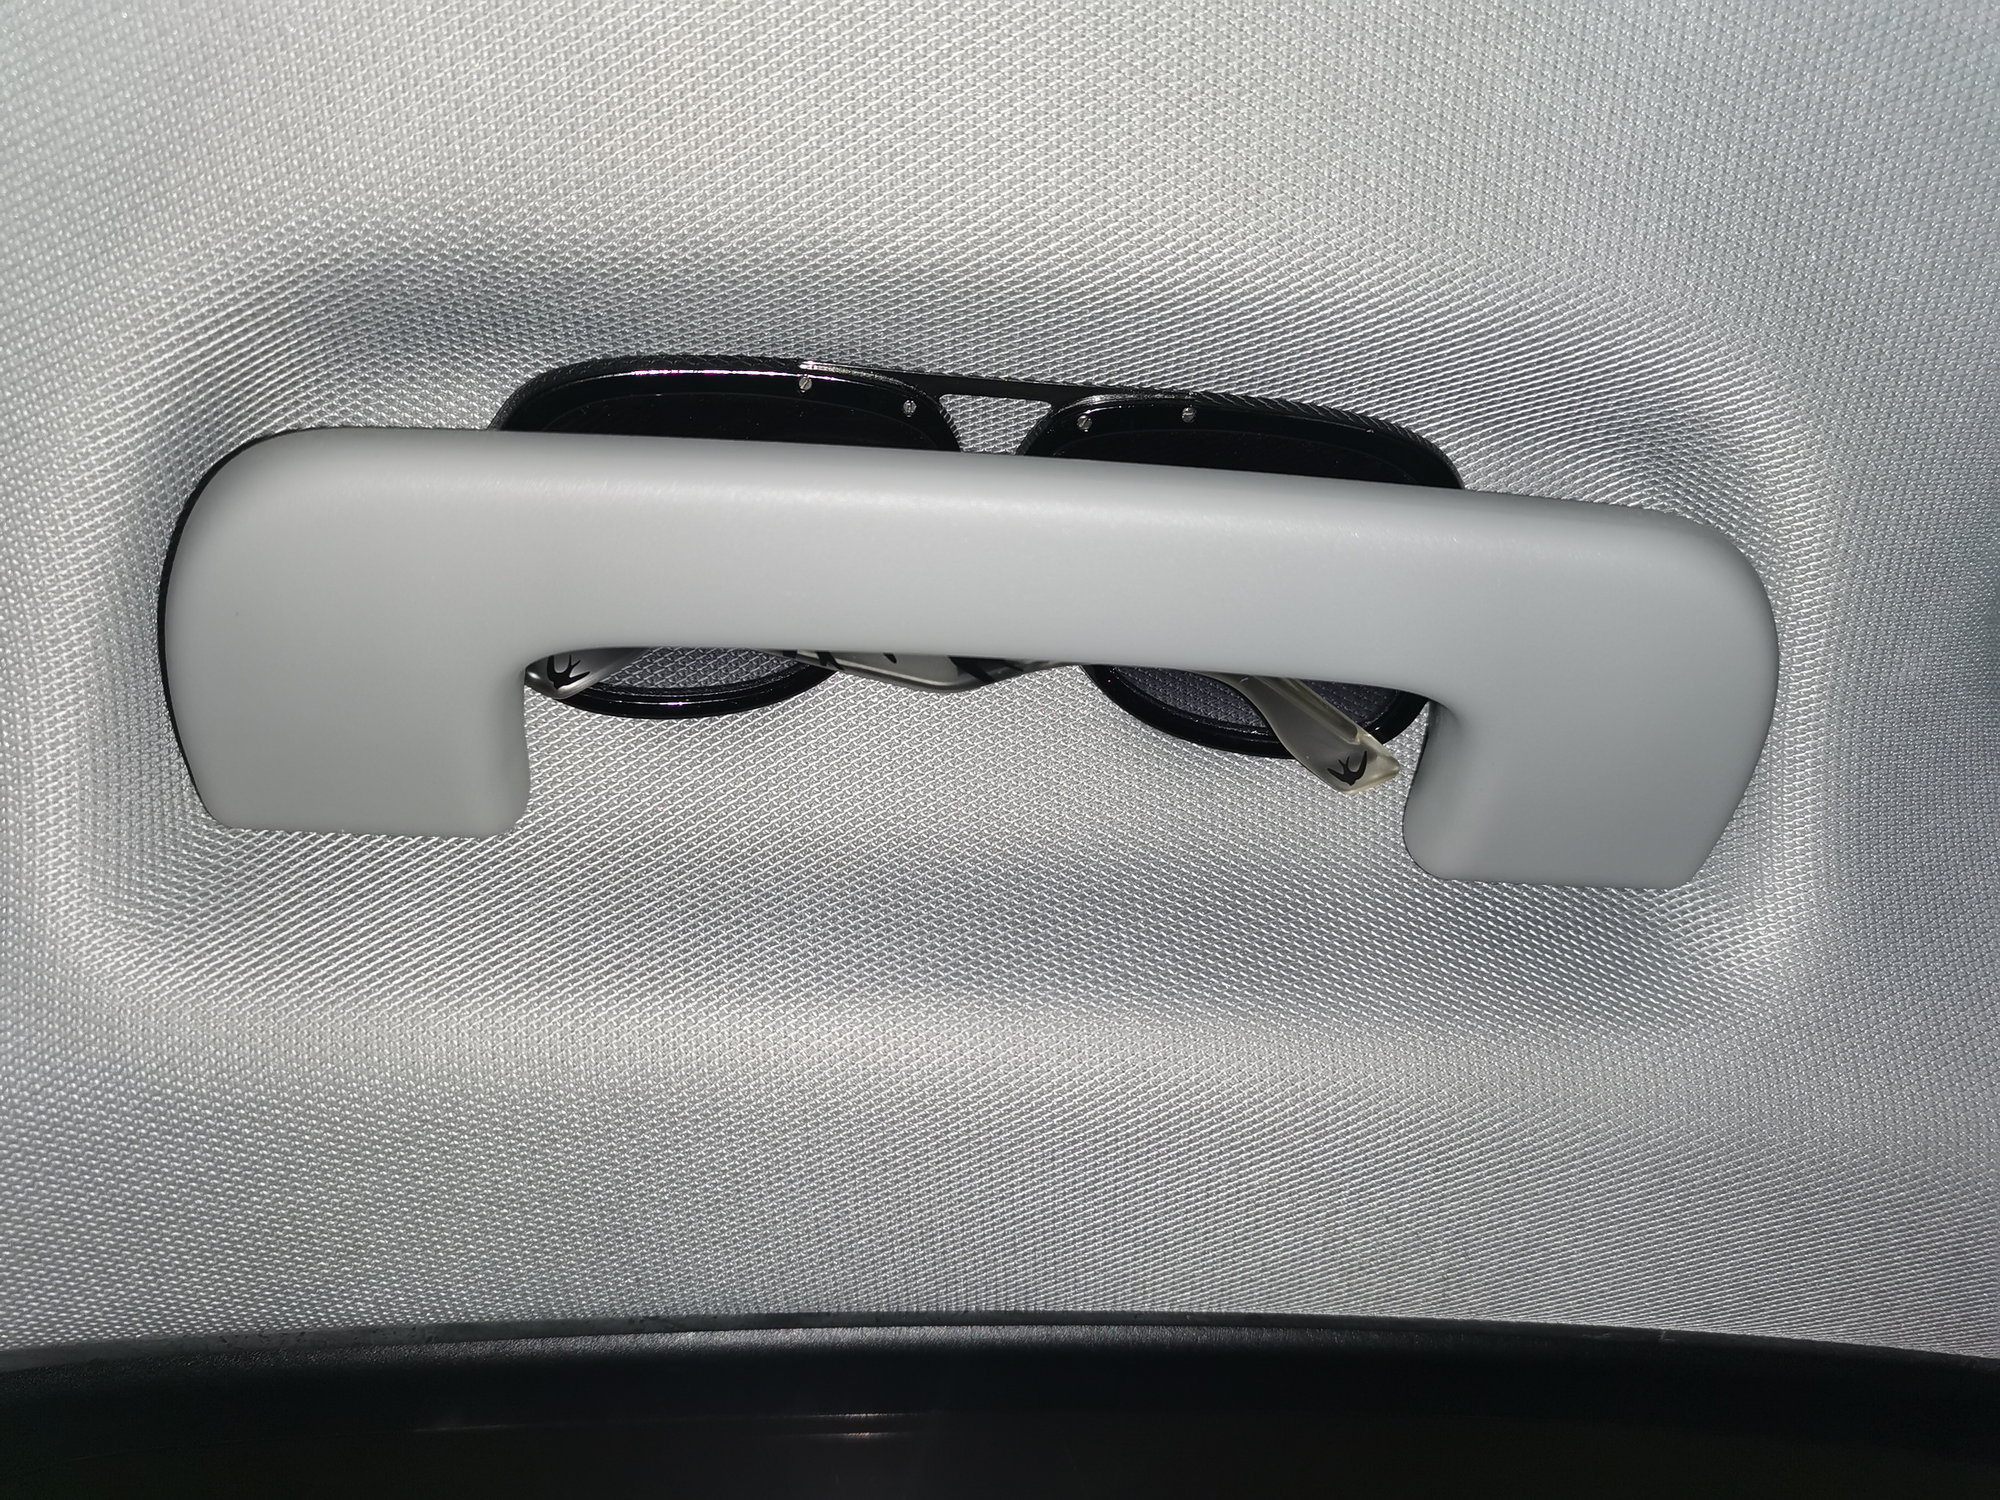 Where do you keep your glasses/sunglasses? - AudiWorld Forums